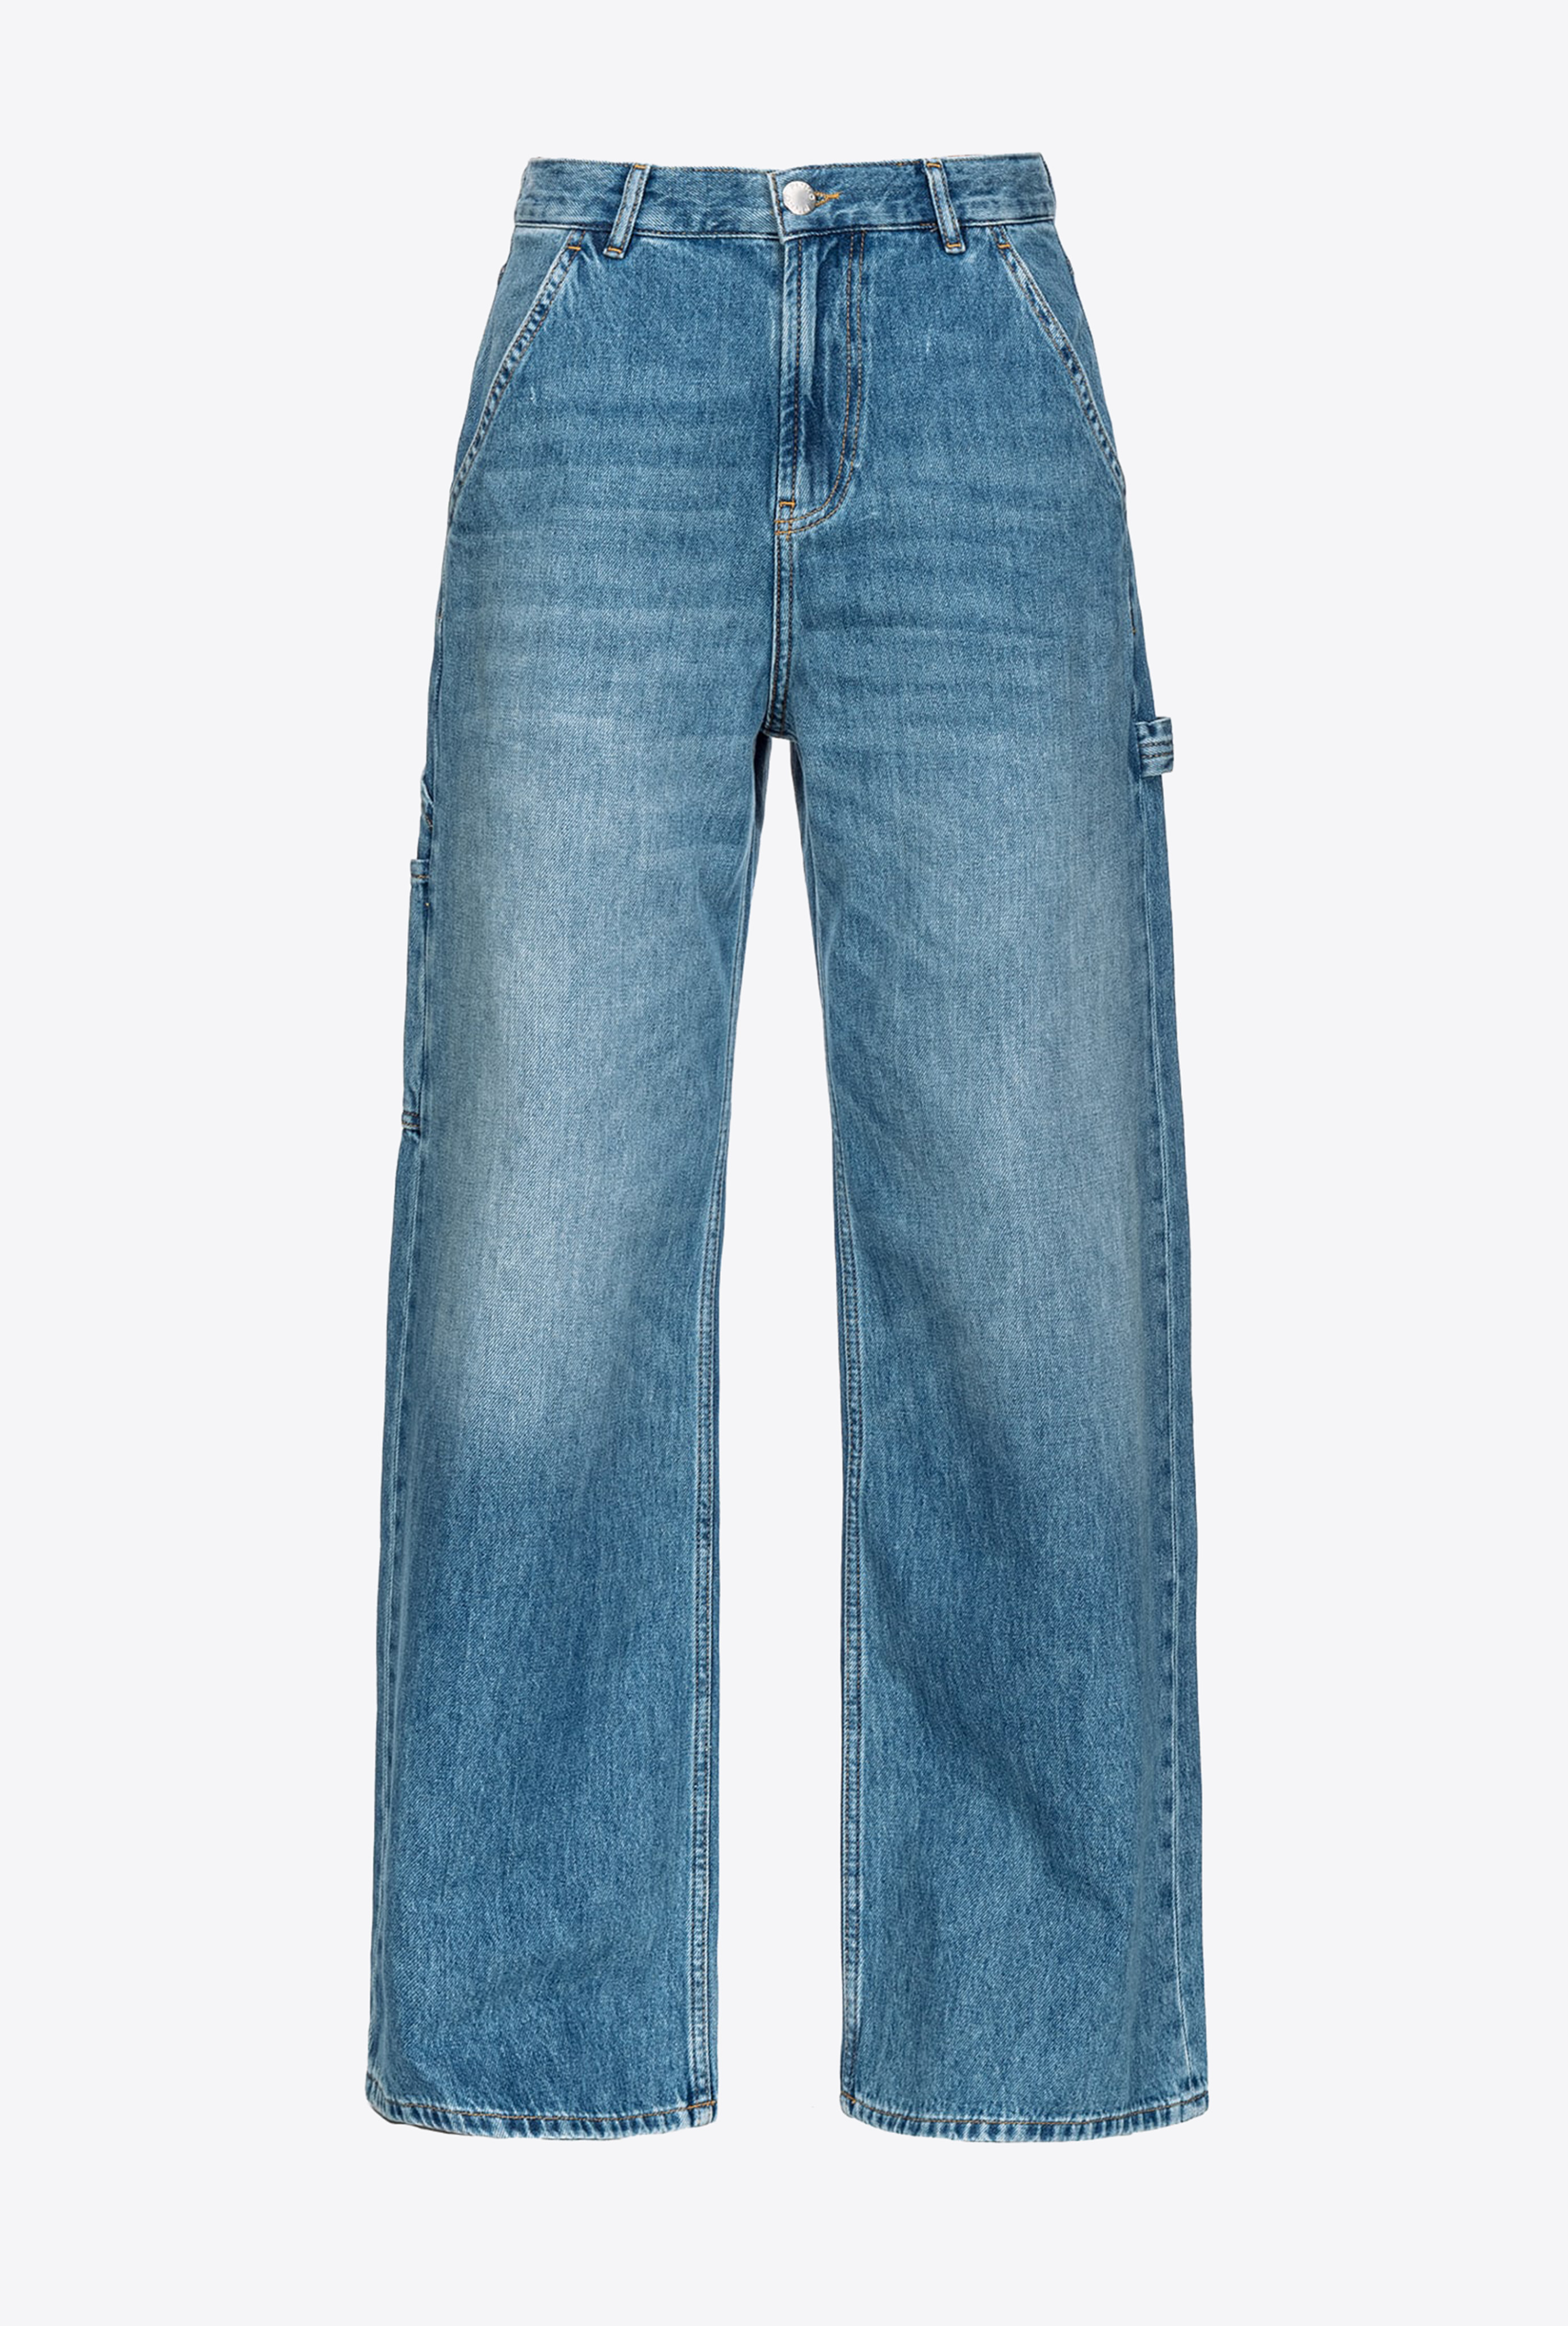 Slouchy wide-leg jeans - Medium light wash